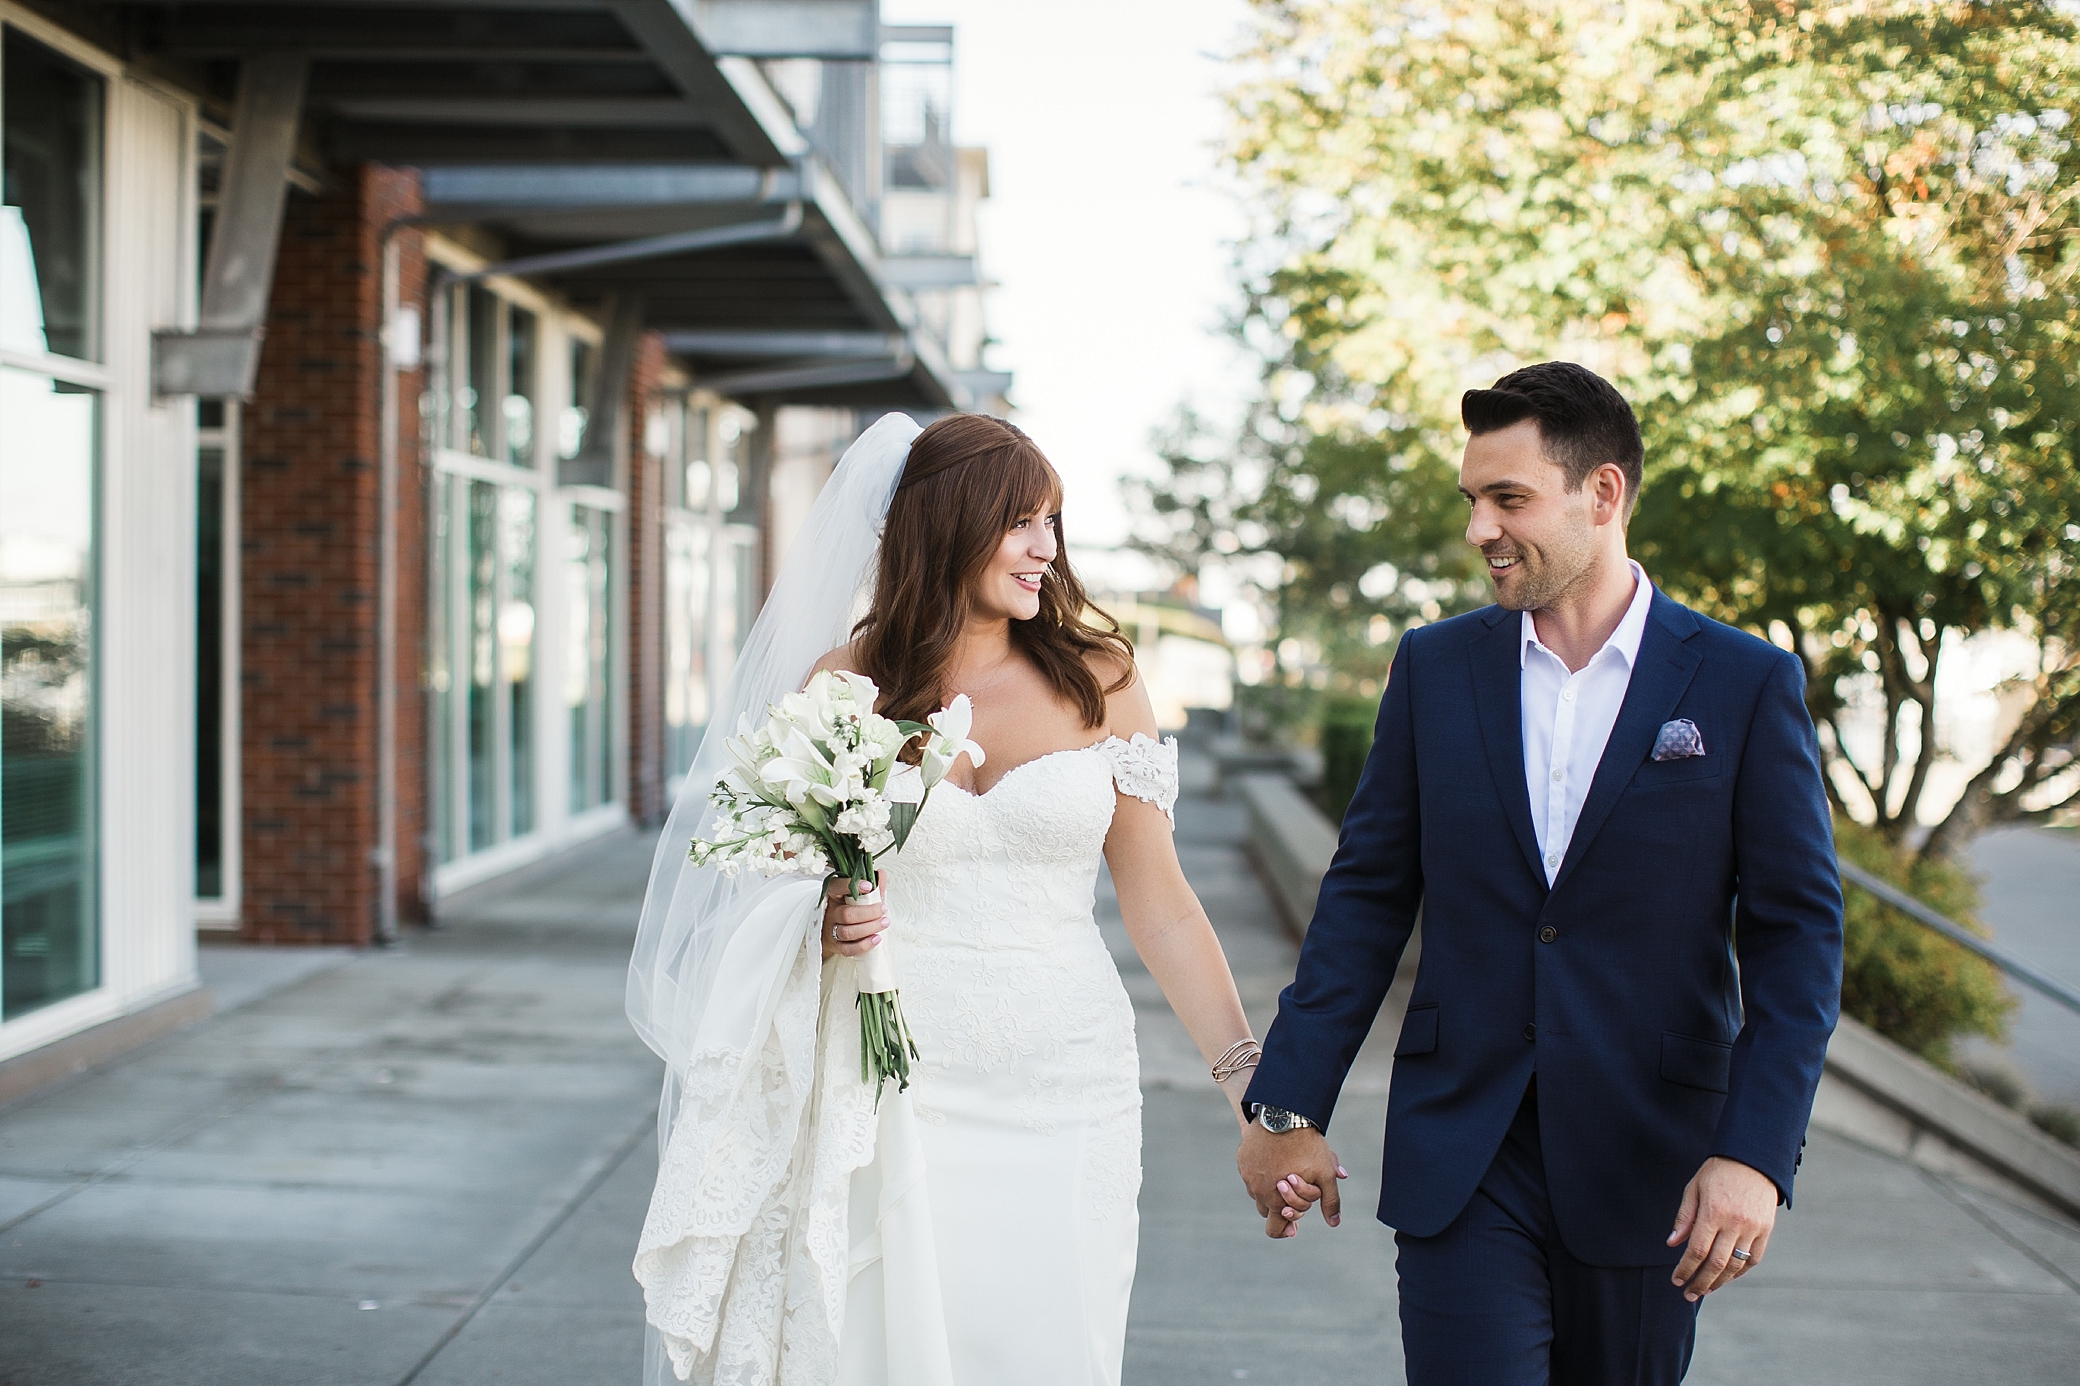 Downtown Tacoma Wedding Photos | Megan Montalvo Photography 